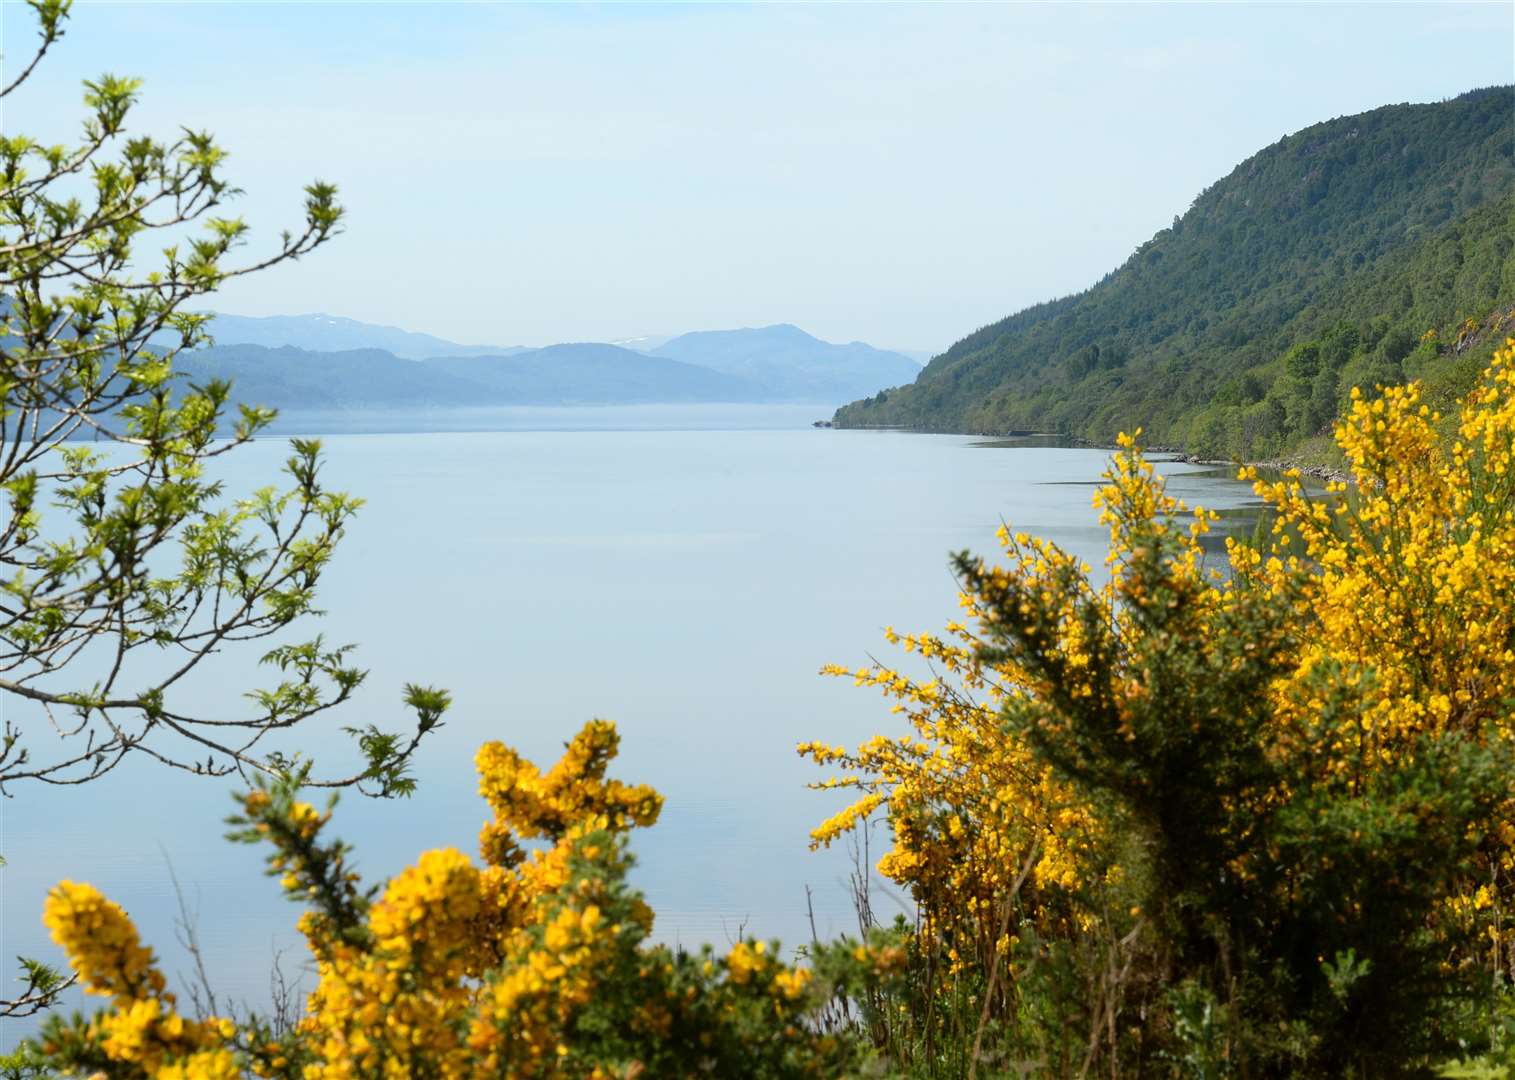 Green entrepreneur Jeremy Leggett plans to set up a flagship rewilding projet on his estate near Loch Ness.